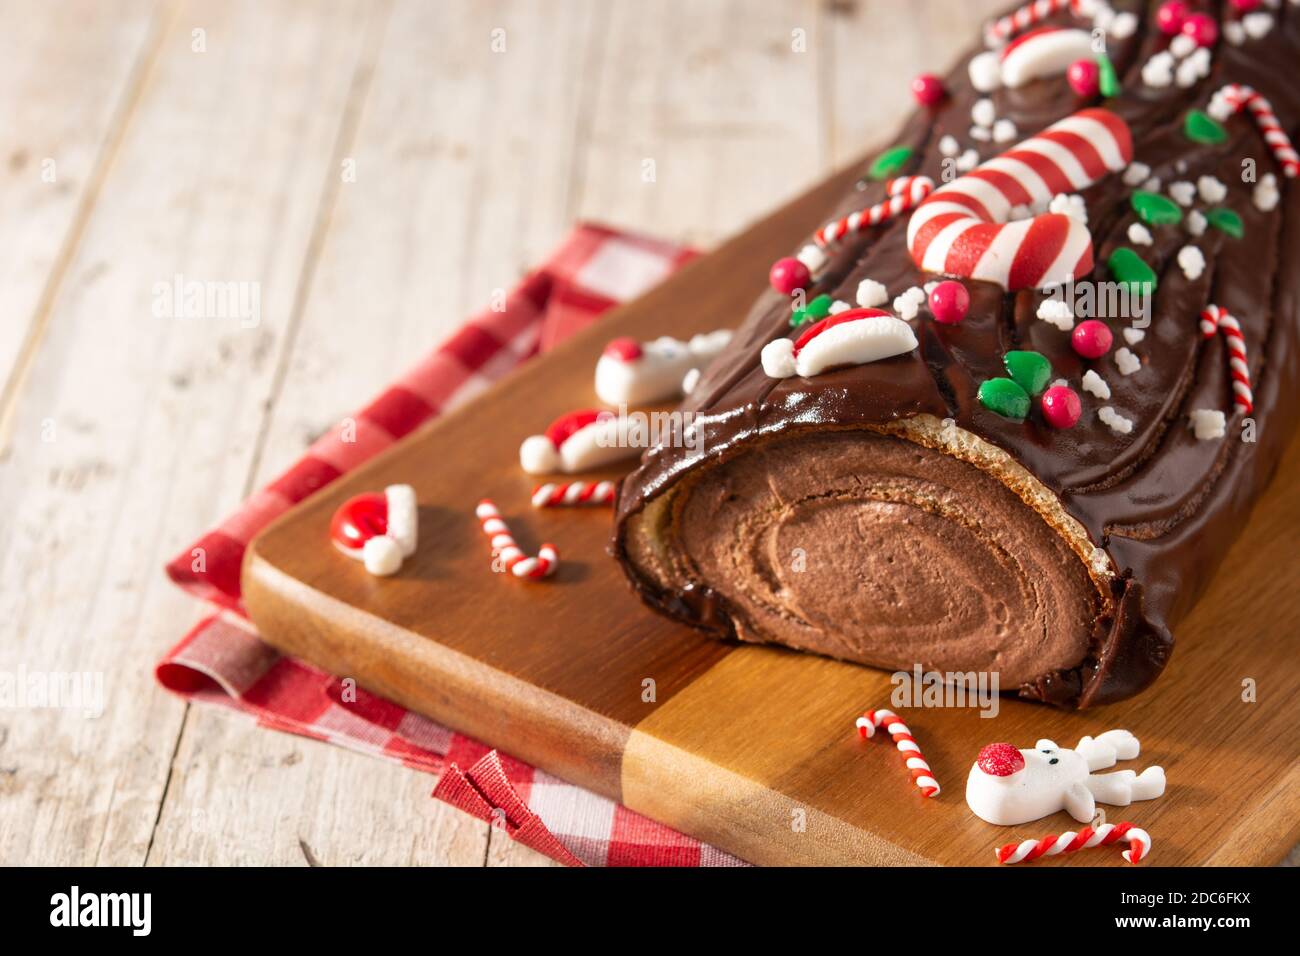 Chocolate yule log christmas cake on wooden table Stock Photo